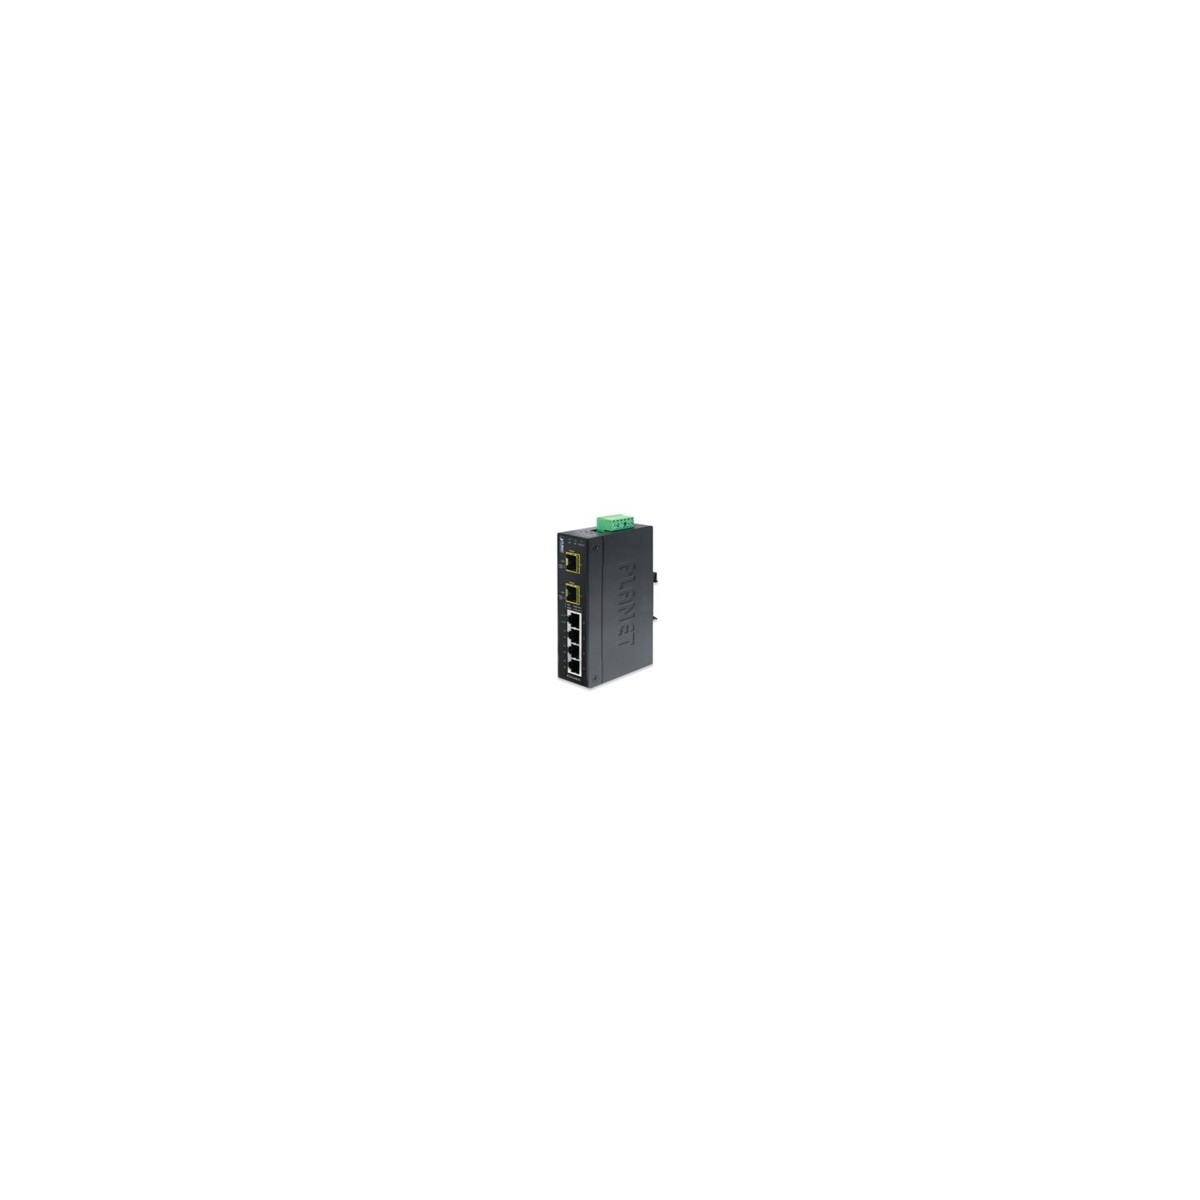 Planet IGS-620TF - Unmanaged - Gigabit Ethernet (10/100/1000) - Full duplex - Wall mountable